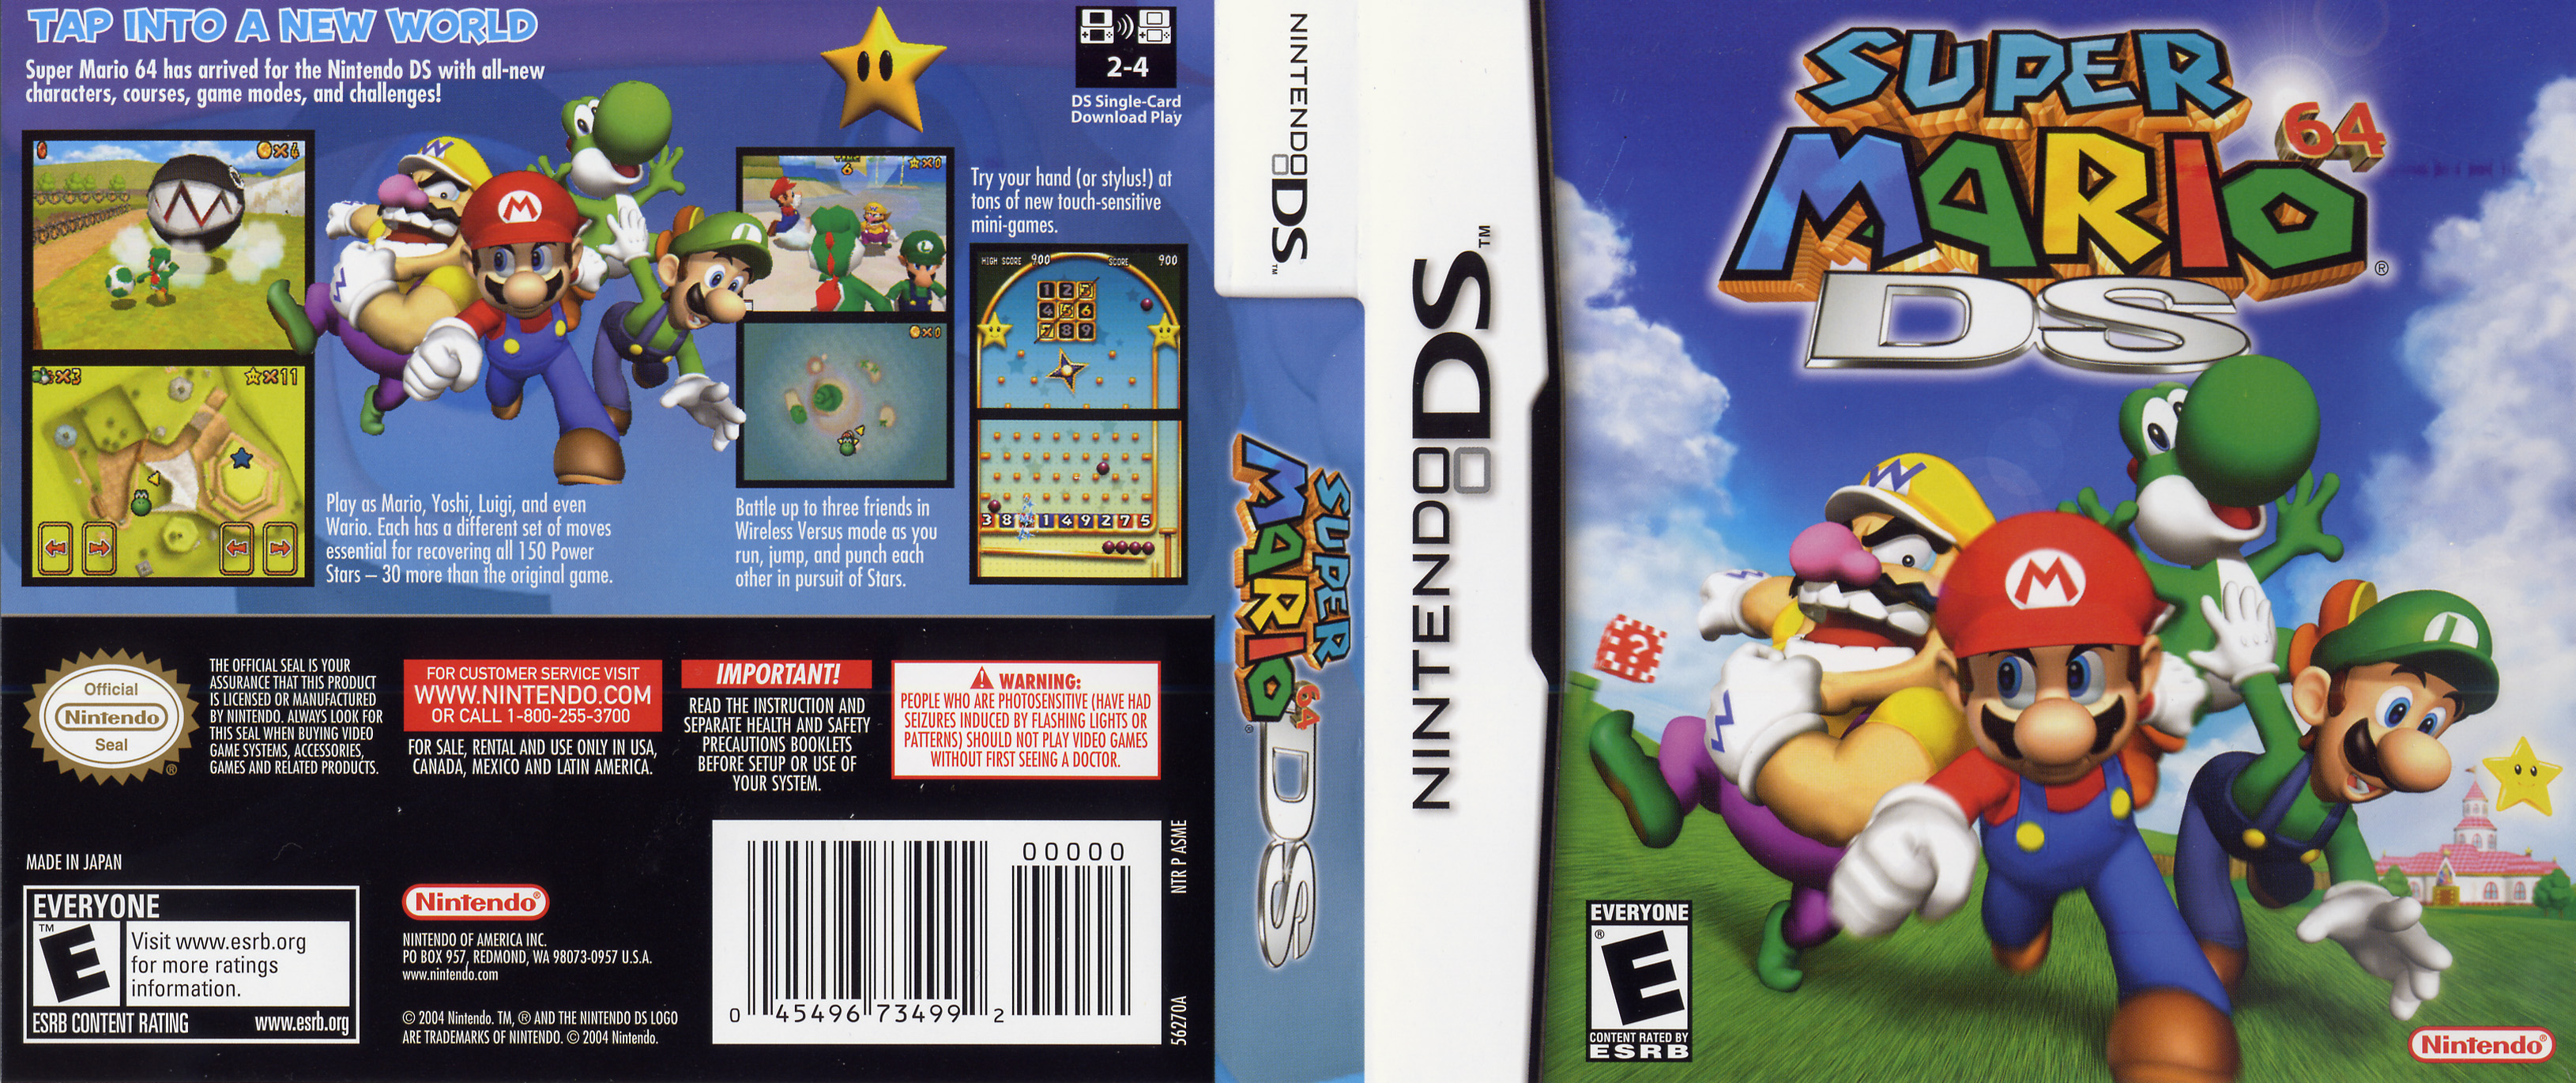 Игры nintendo 64 mario. Nintendo DS super Mario 64 DS. Супер Марио 64 Нинтендо ДС. Nintendo 64 Mario 64 диск. New super Mario Bros. Нинтендо ДС.